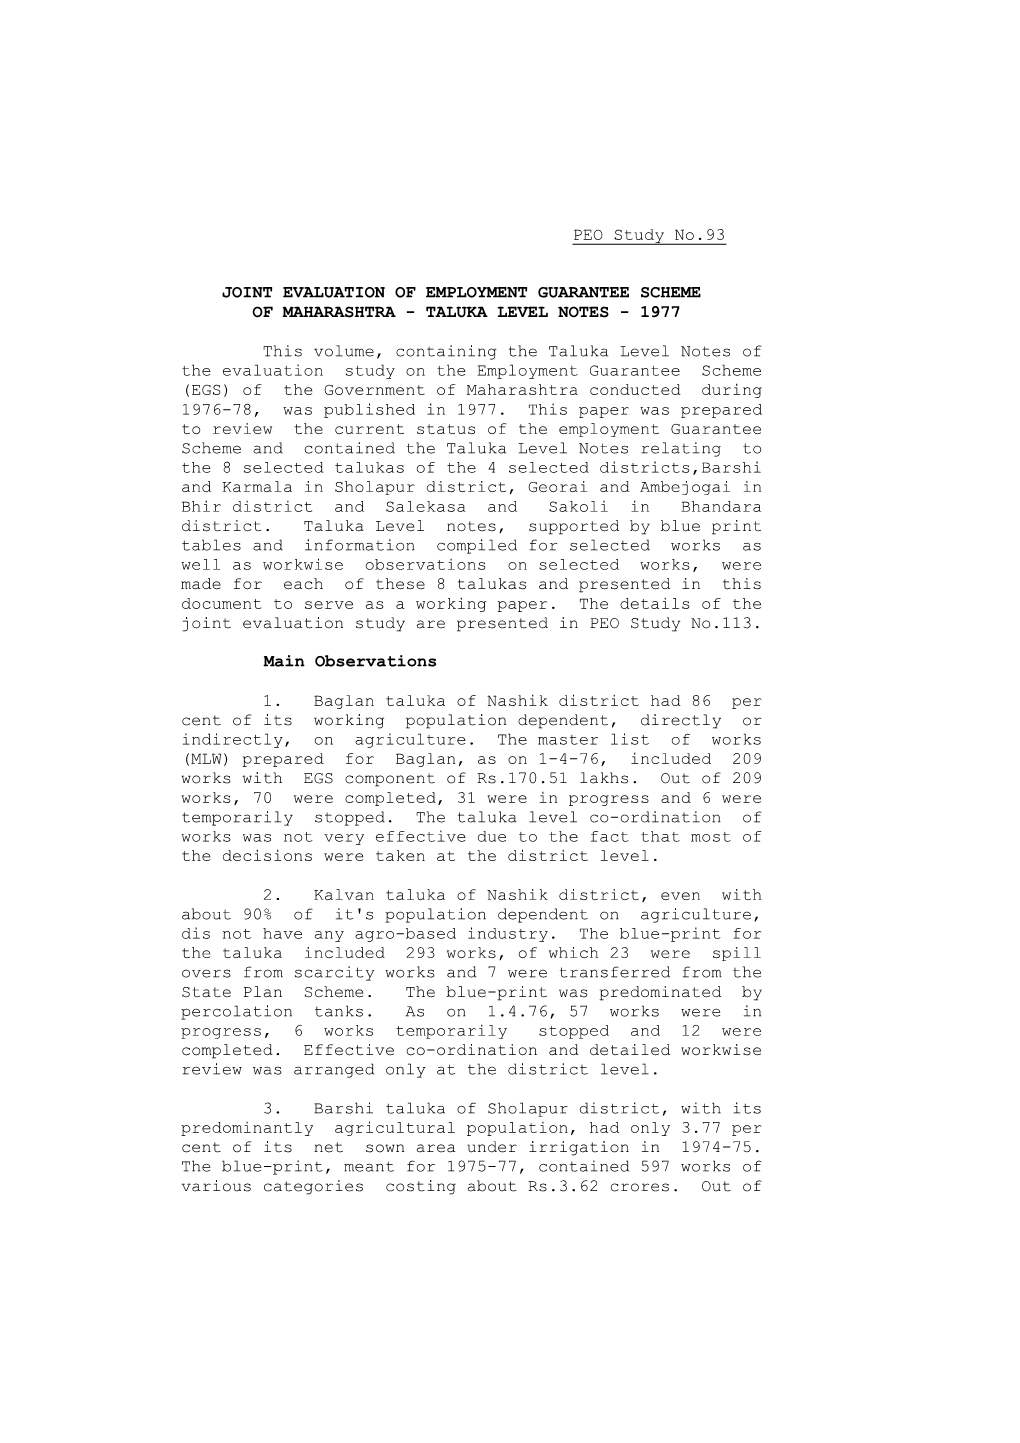 Joint Evaluation of Employment Guarantee Scheme of Maharashtra - Taluka Level Notes - 1977